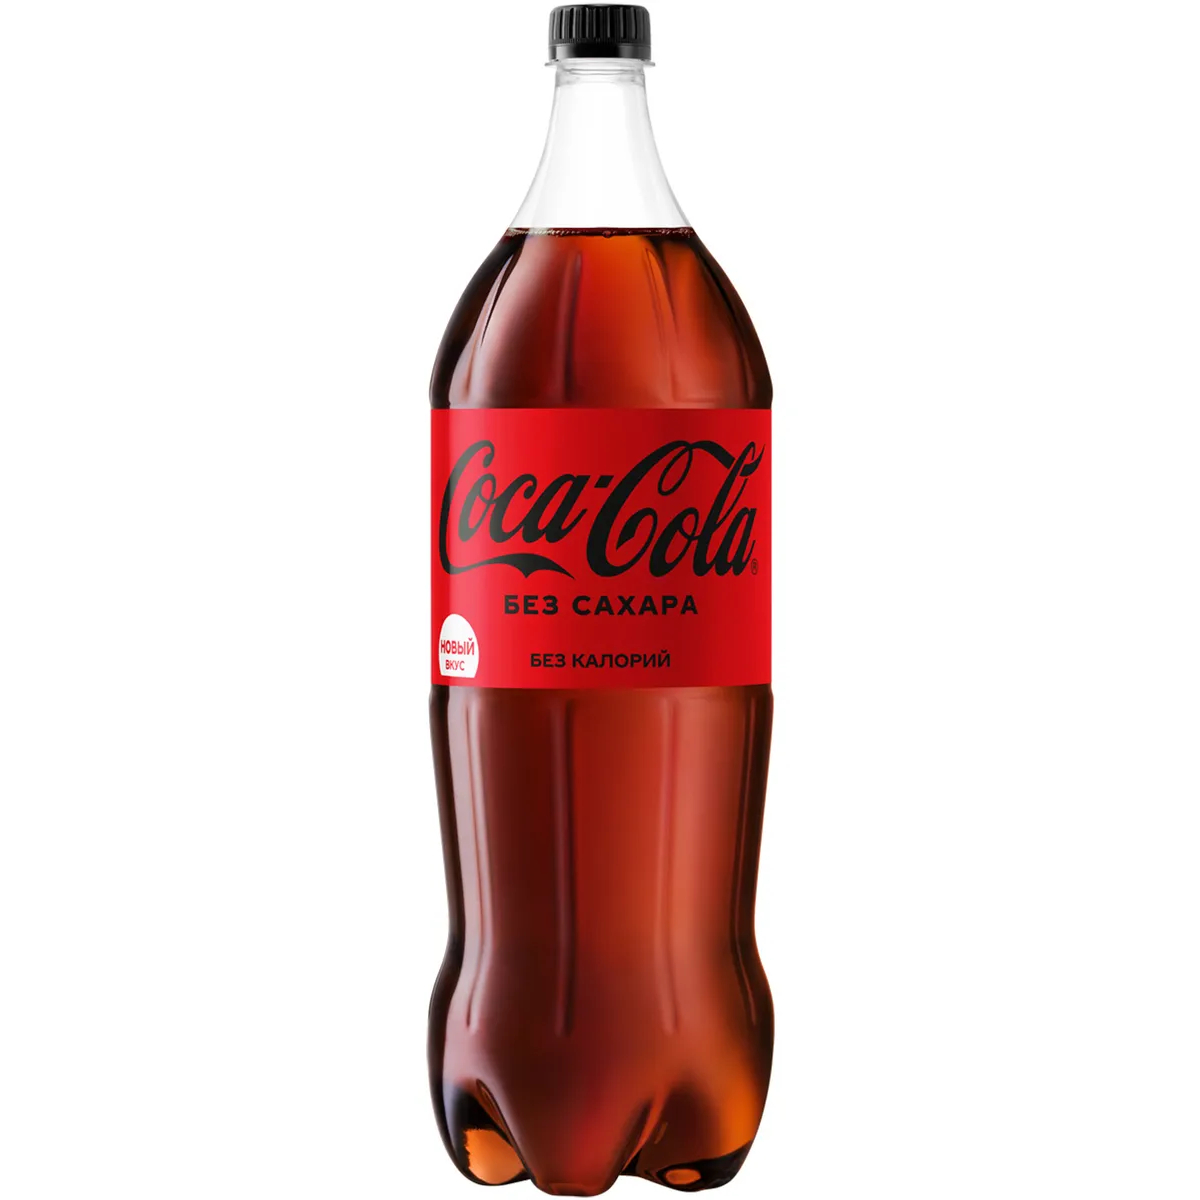 Напиток Coca-Cola Zero без сахара, 2 л coca cola кока кола импорт 0 15 литра ж б 24 шт в уп